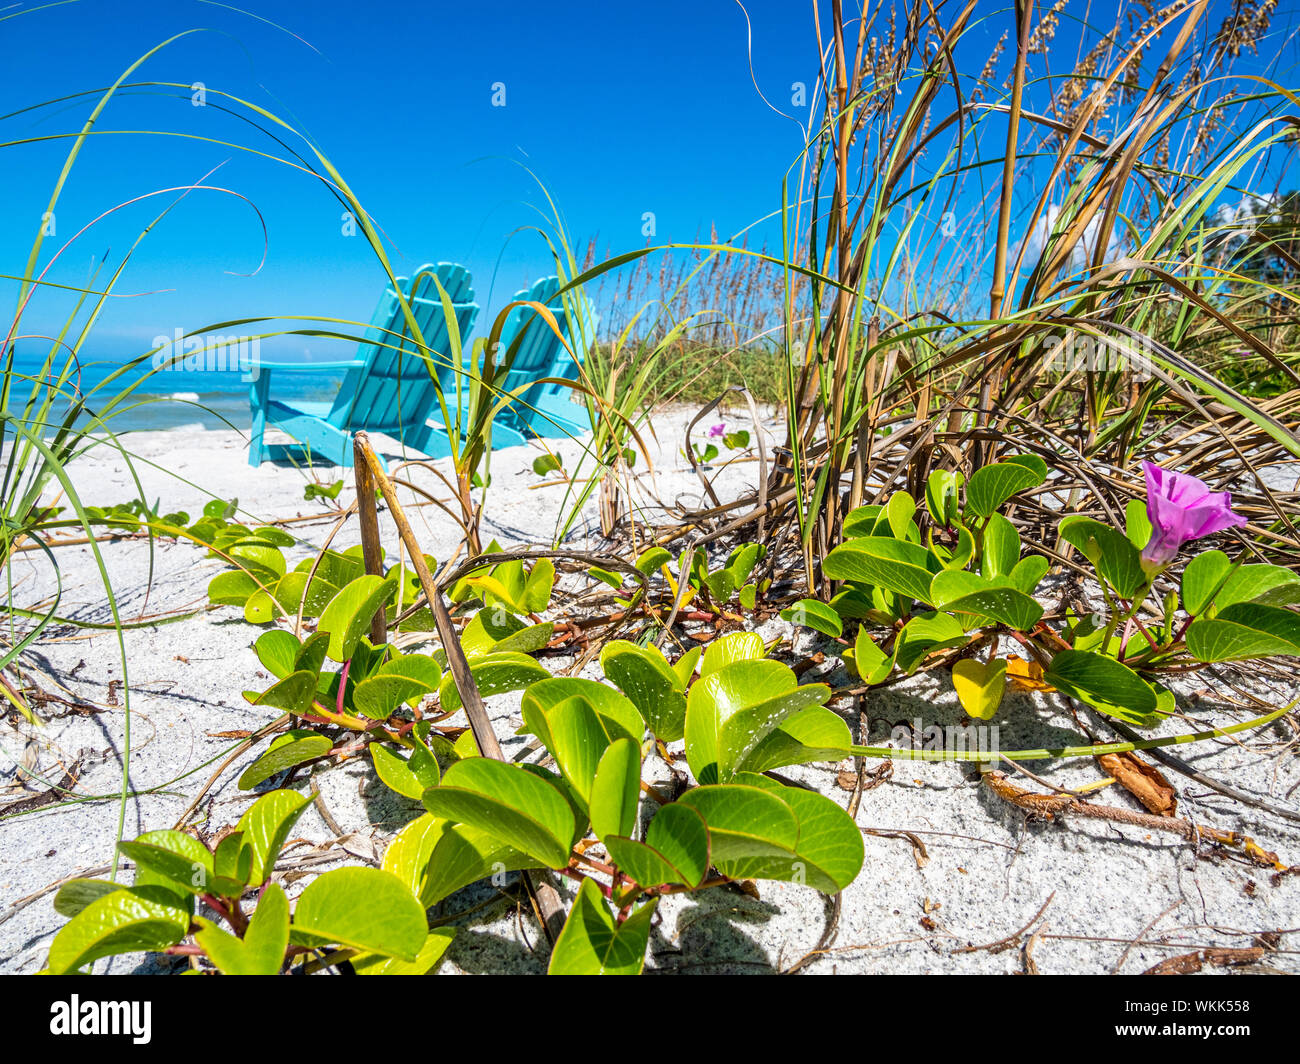 Beach chairs on Gulf of Mexico beach on Longboat Key Florida Stock Photo